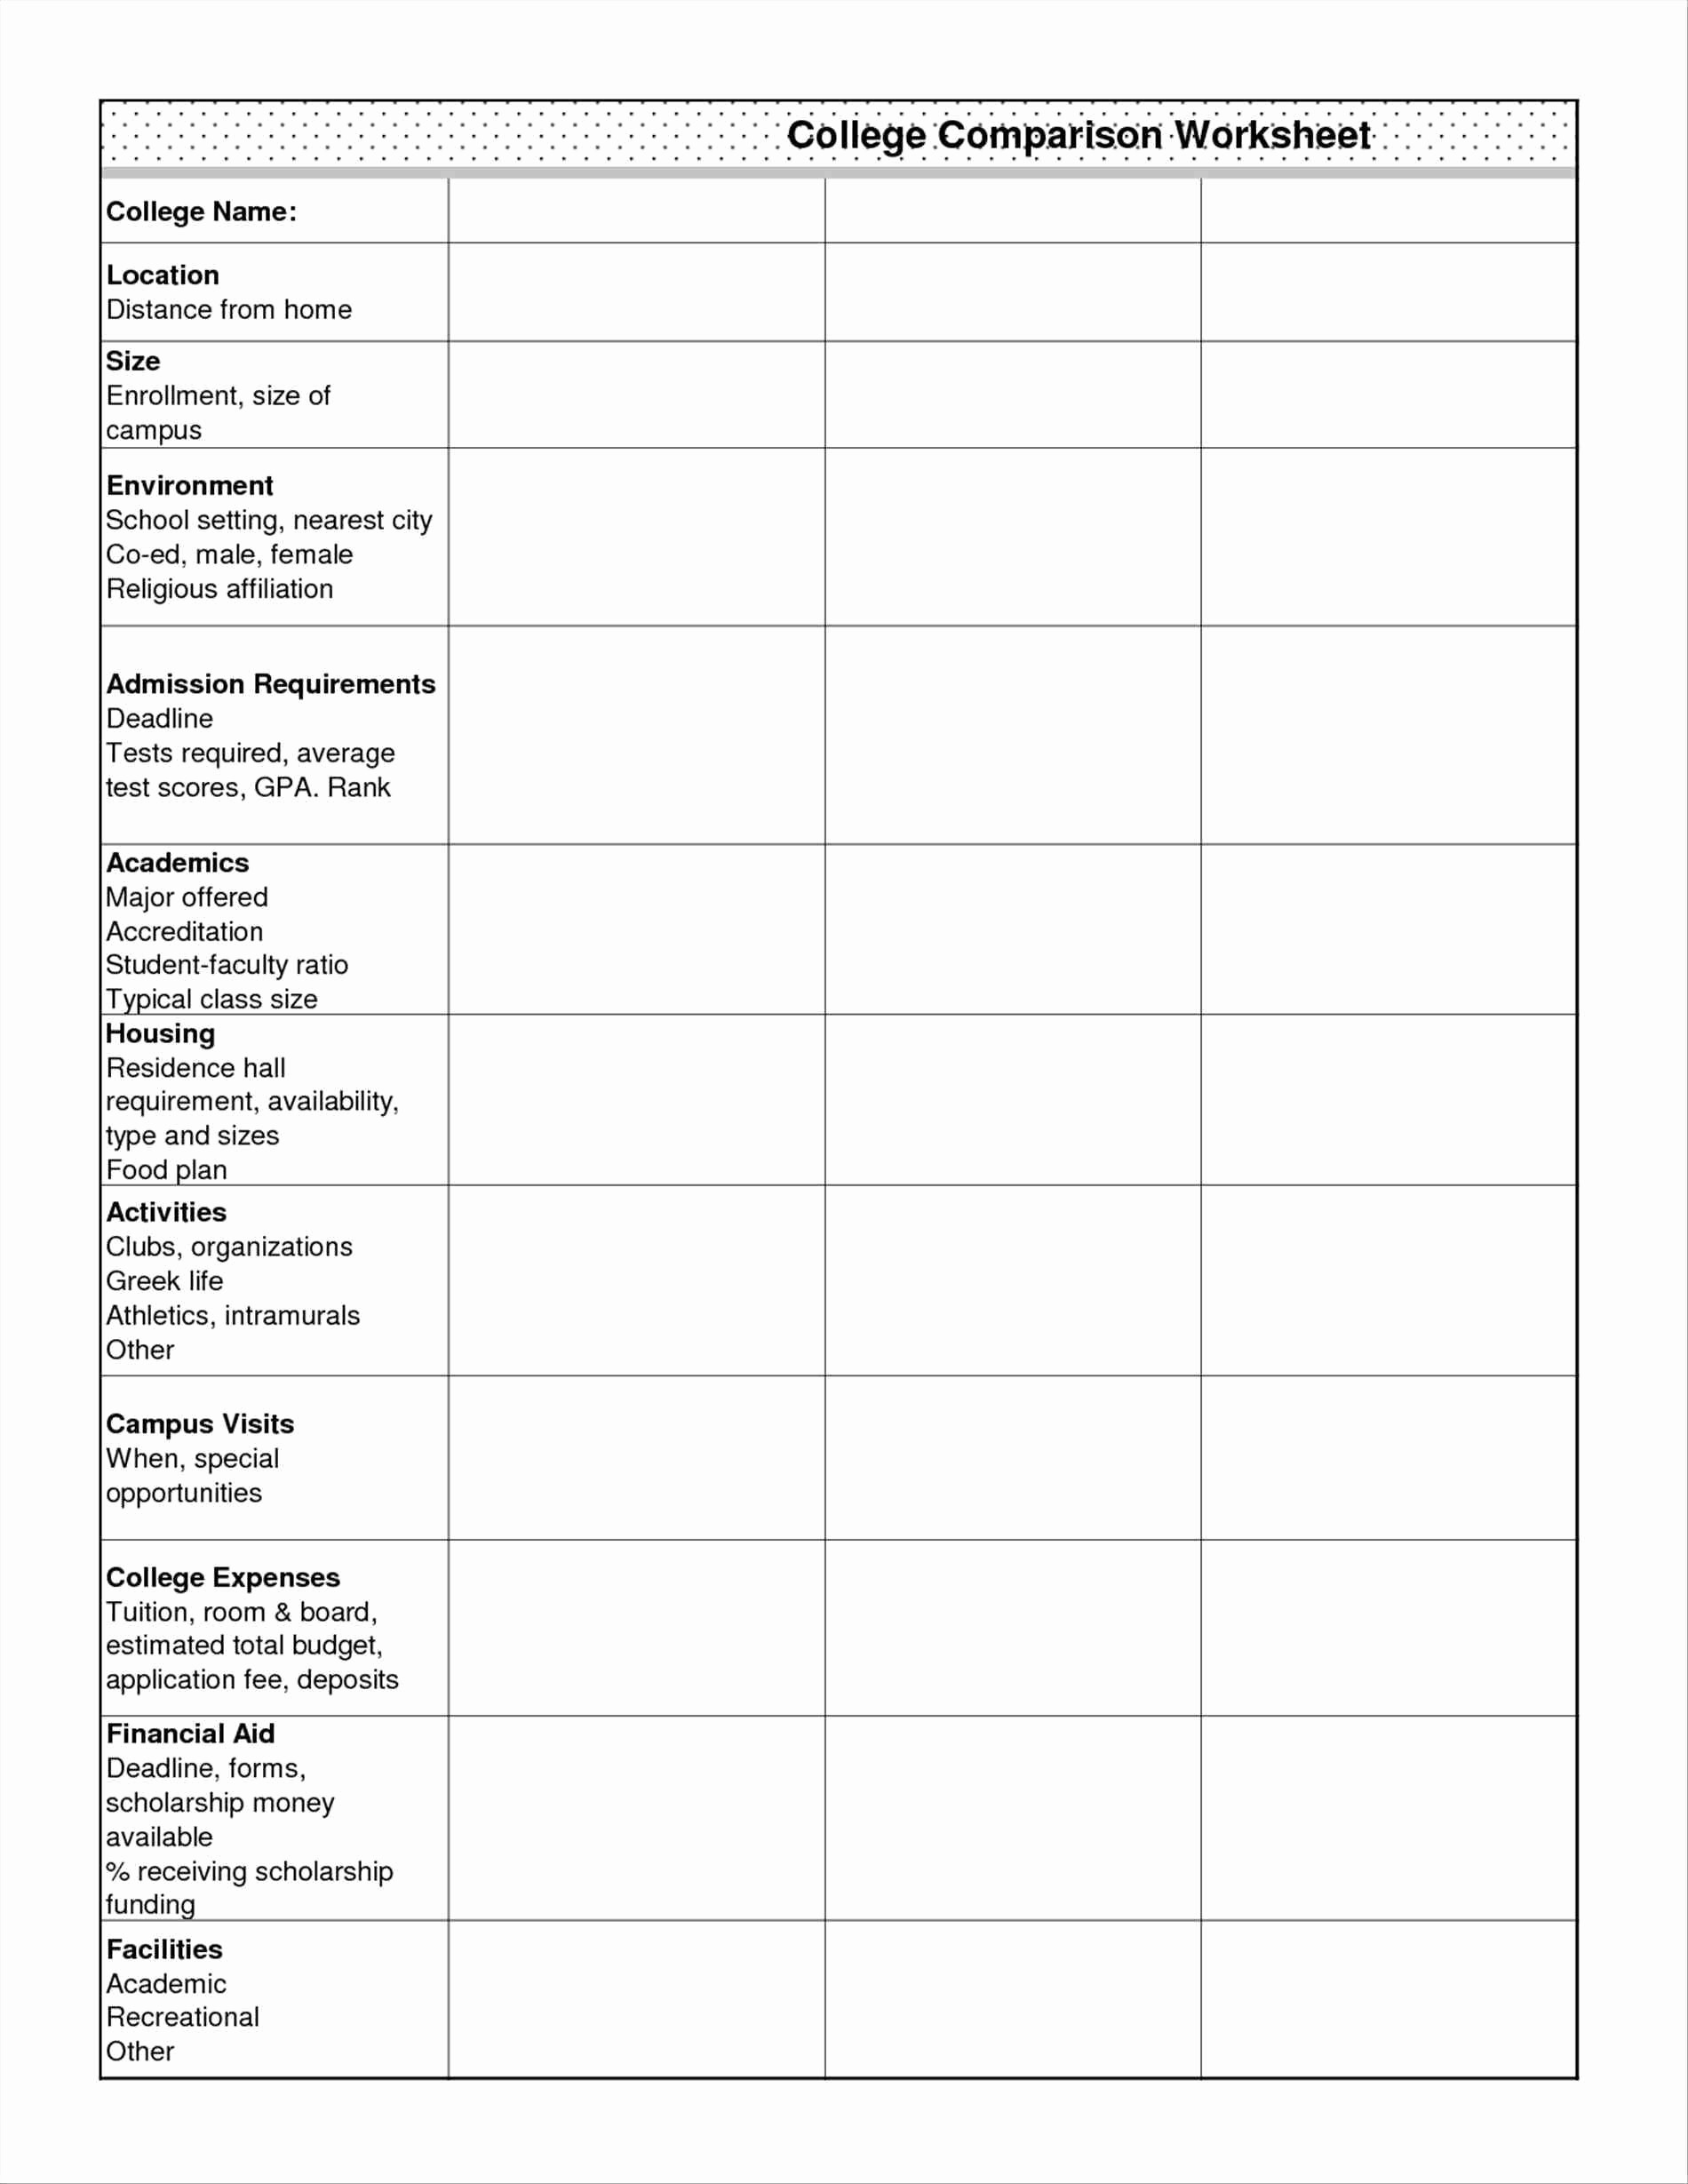 50 Fresh College Comparison Worksheet Template DOCUMENTS IDEAS Document Chart